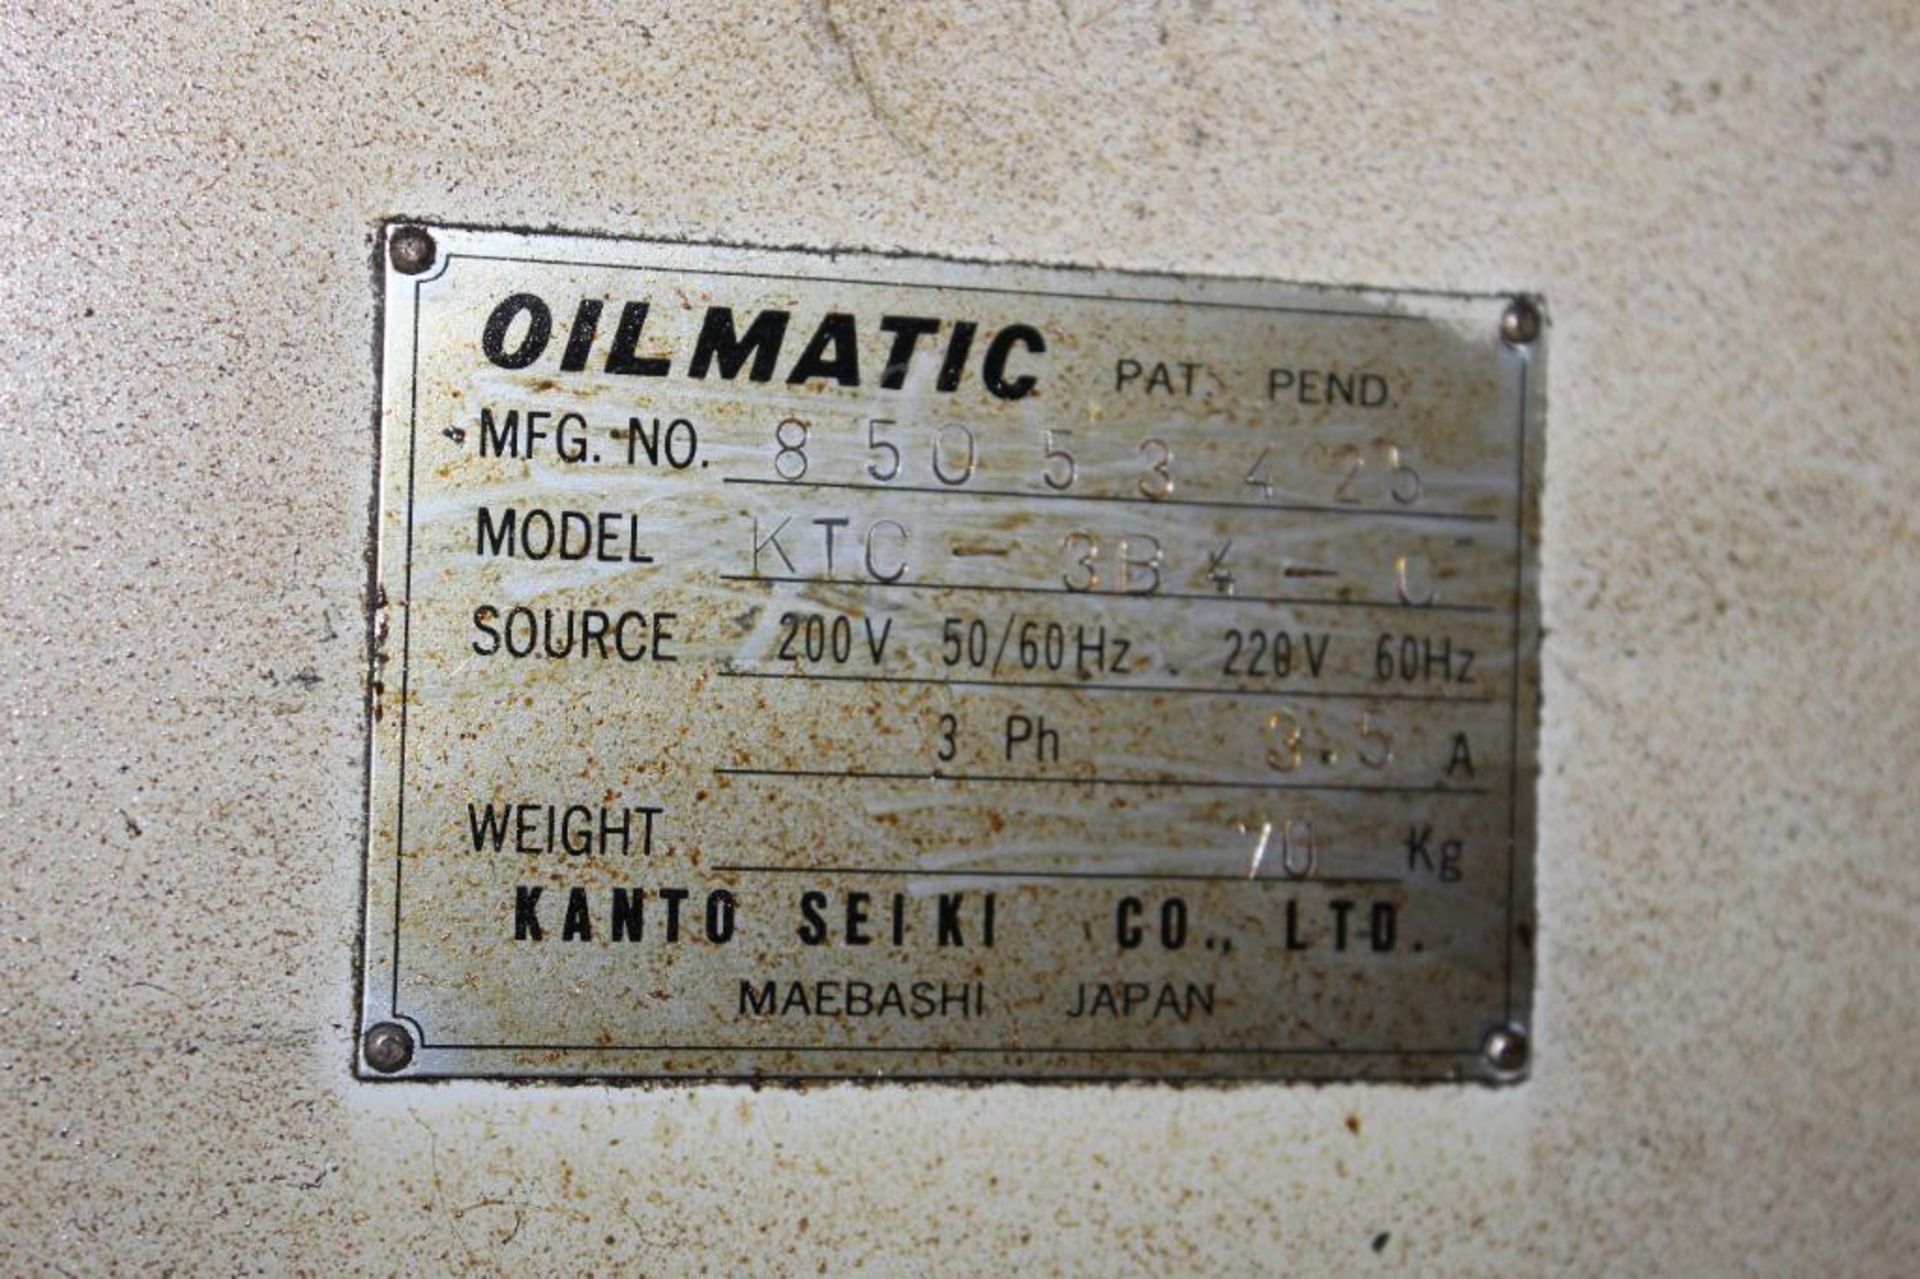 LeBlond Makino Model KTL 3B4-C Oil- Matic with Yuken Piston Pump Model A16-F-R-01-B-V-20. - Image 14 of 28